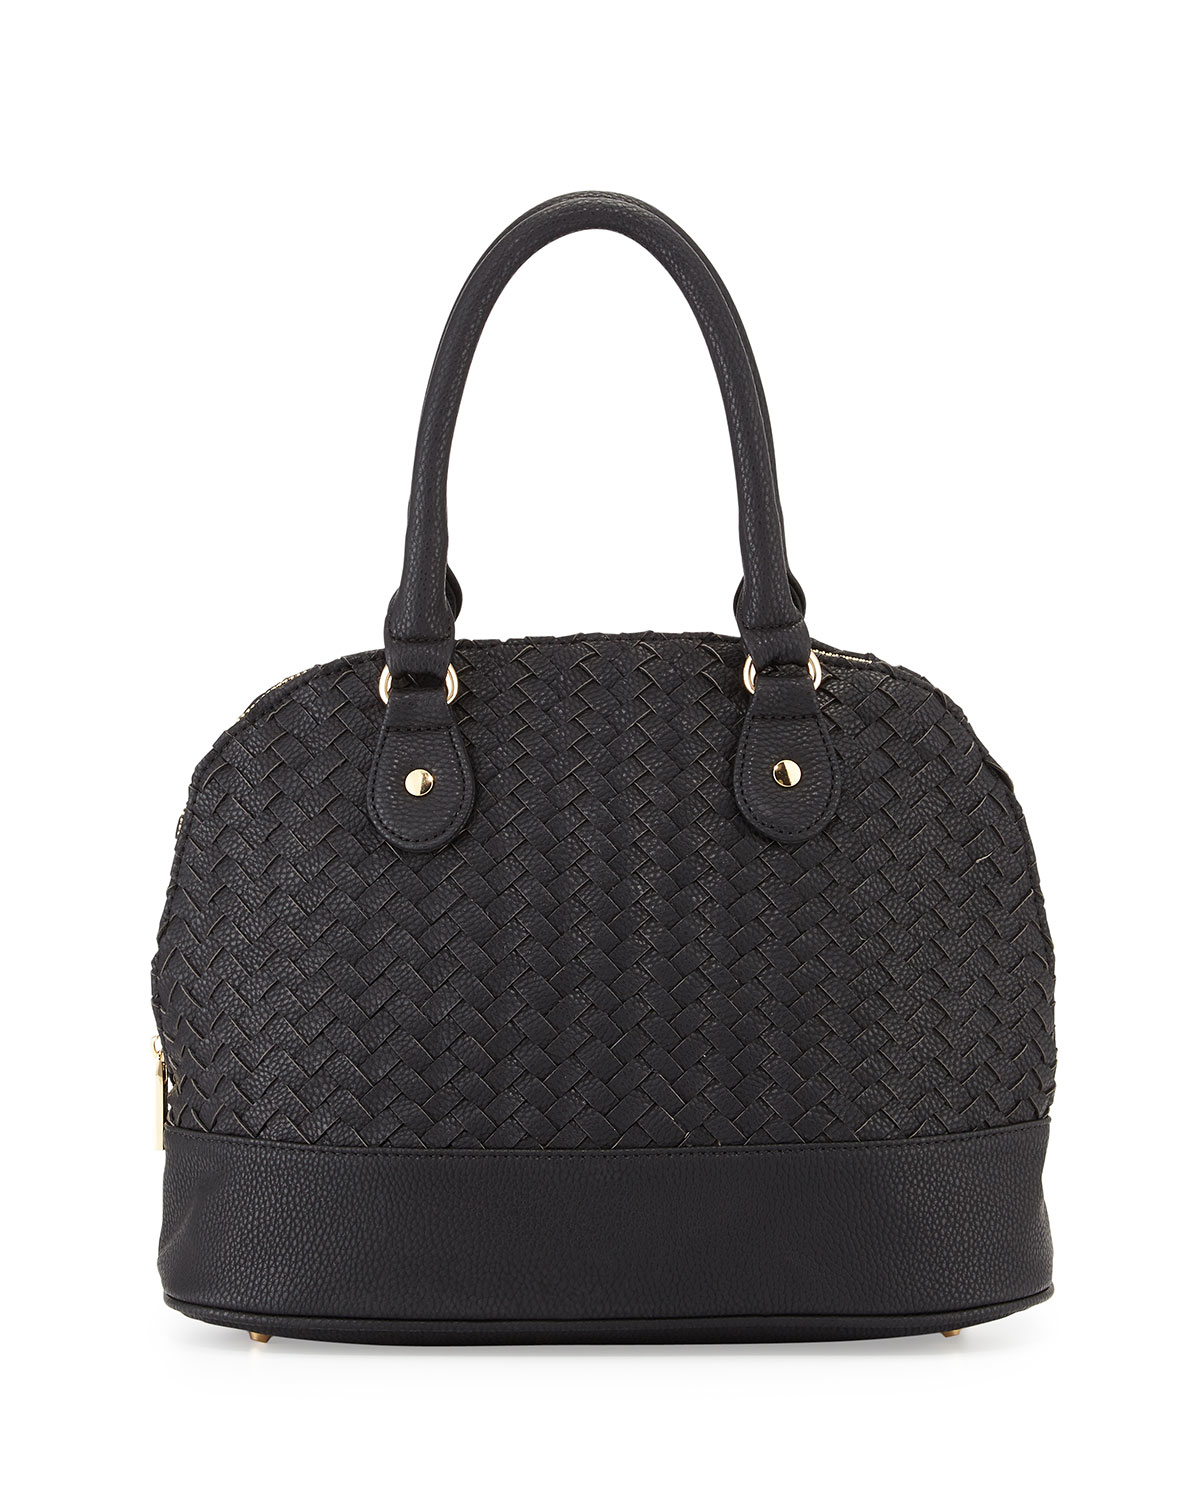 Lyst - Neiman Marcus Woven Dome Satchel Bag in Black